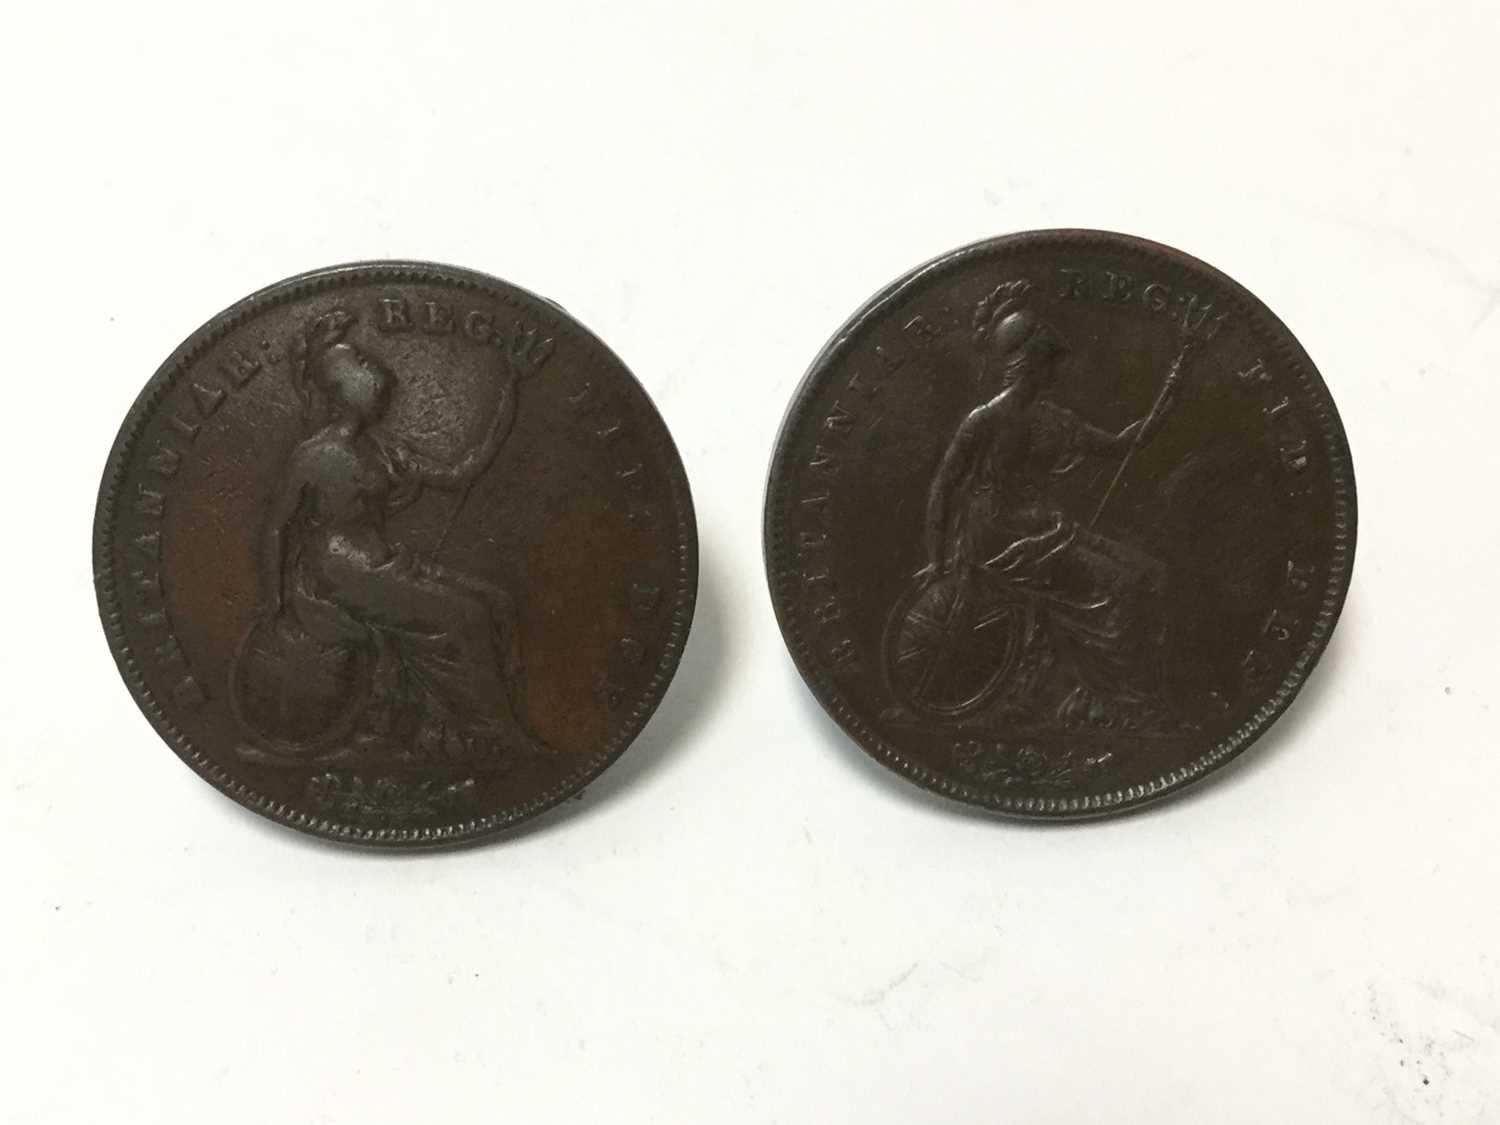 Lot 445 - G.B. - Copper Pennies Victoria 1843 (N.B. Reverse error D.F.F in legend instead of D.E.F) VG-AF and 1844 GVF (2 coins)